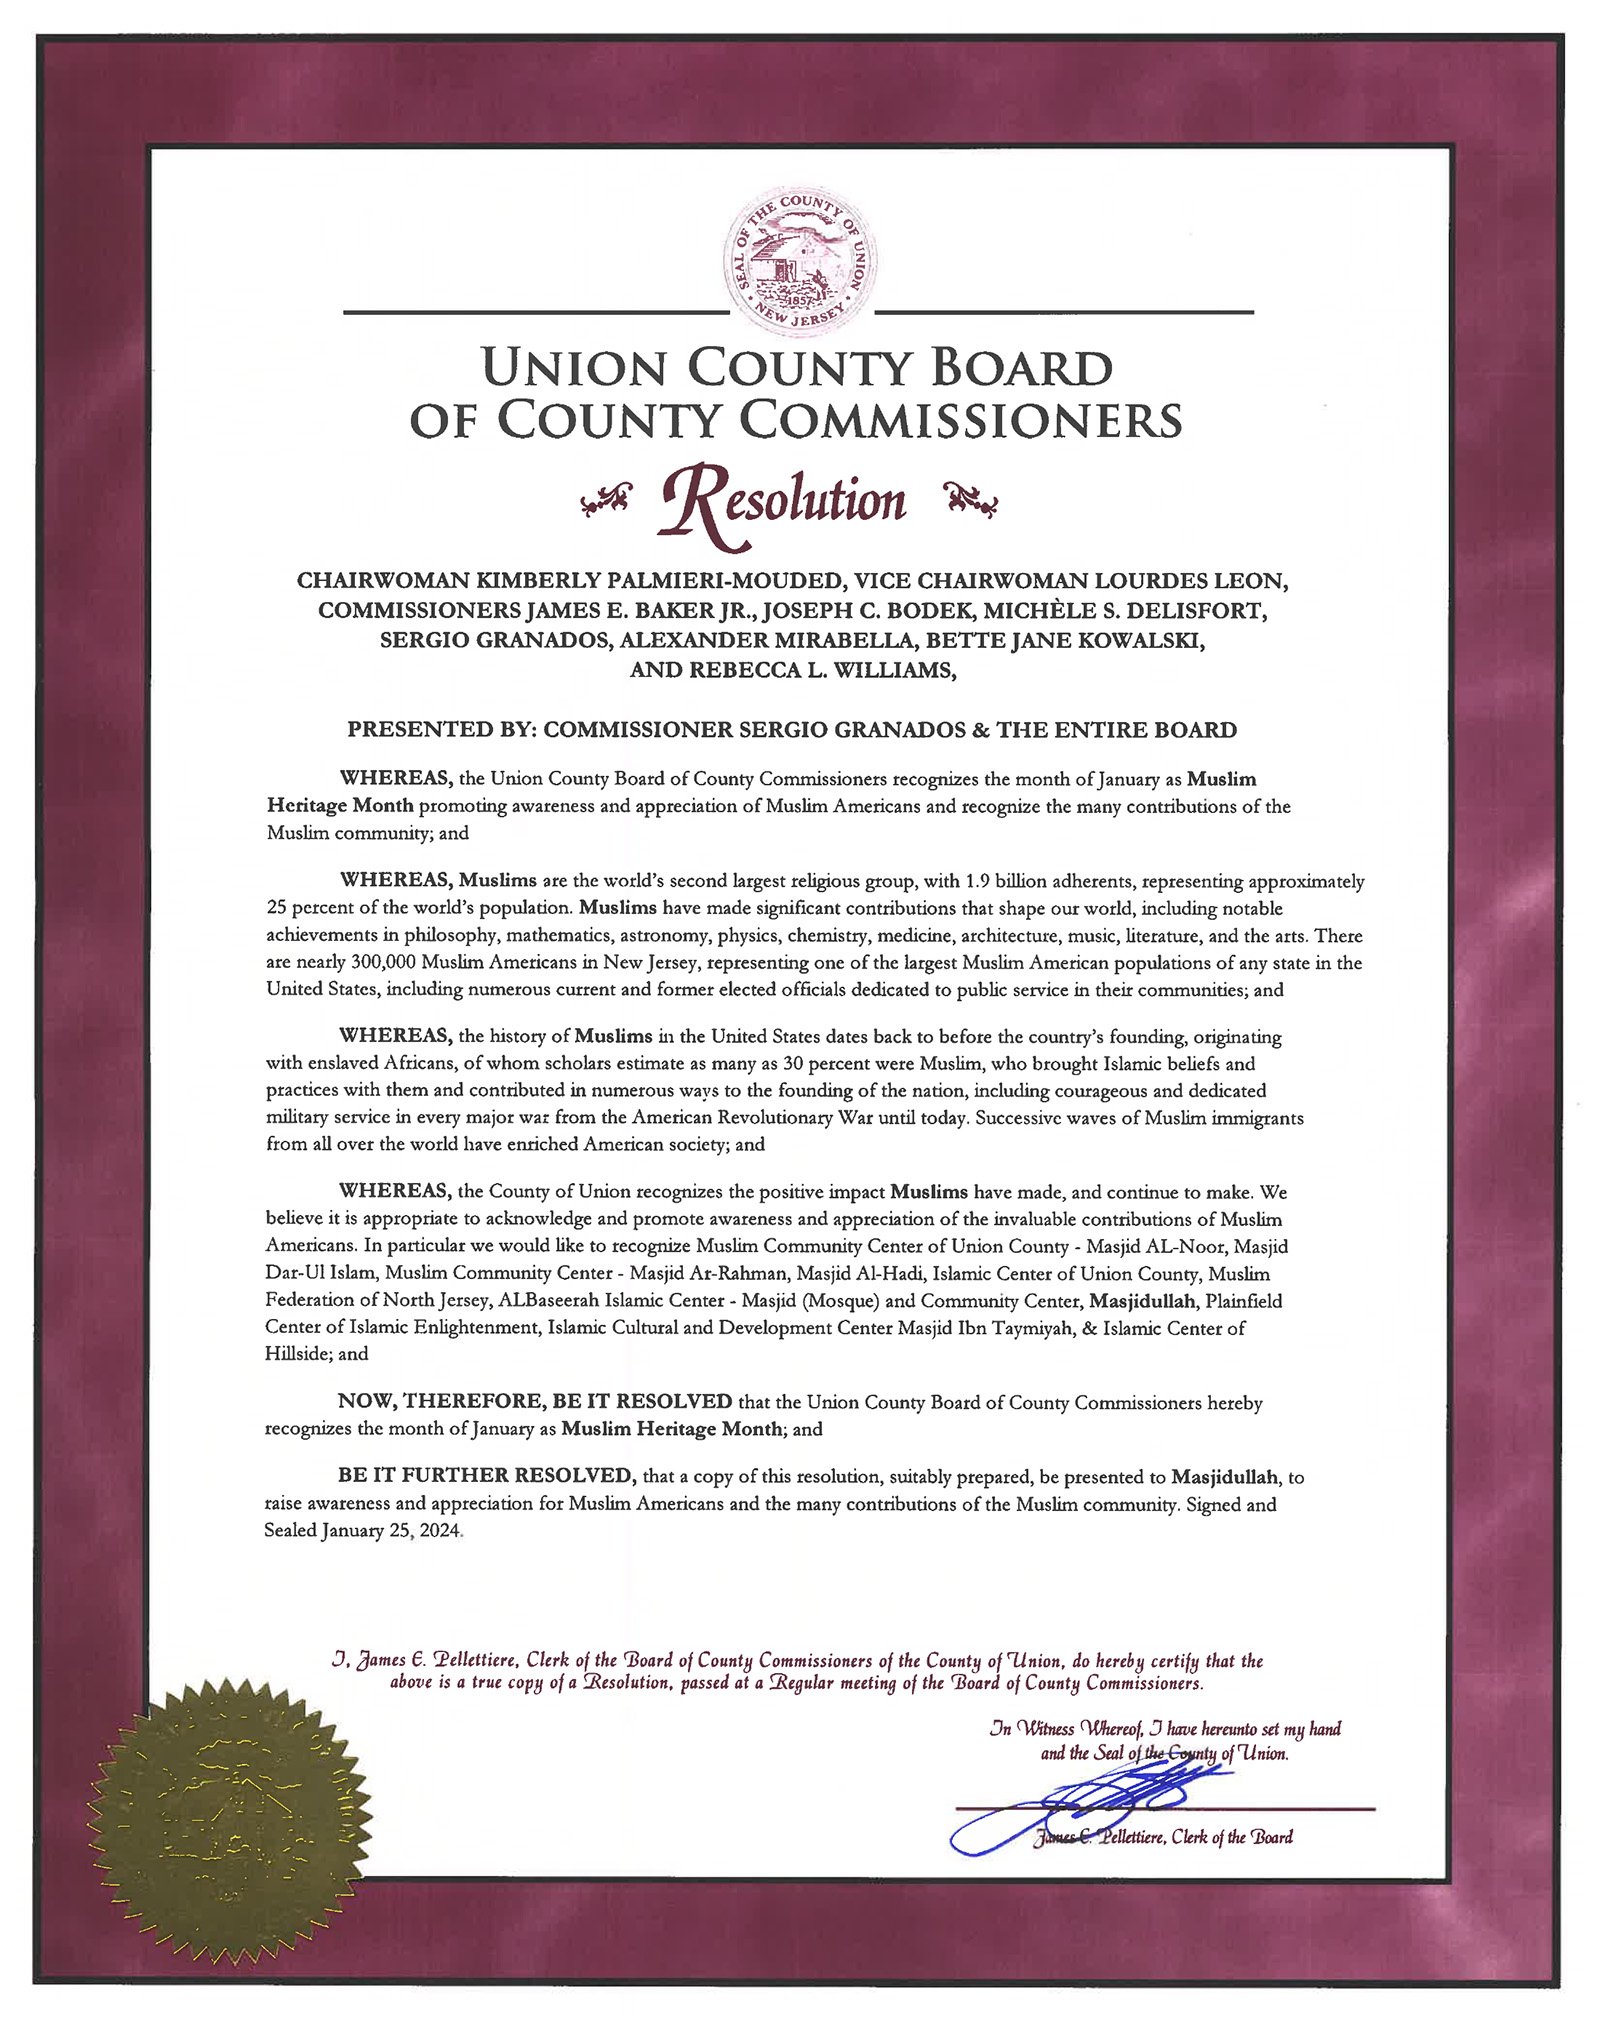 Union County Resolution.jpg